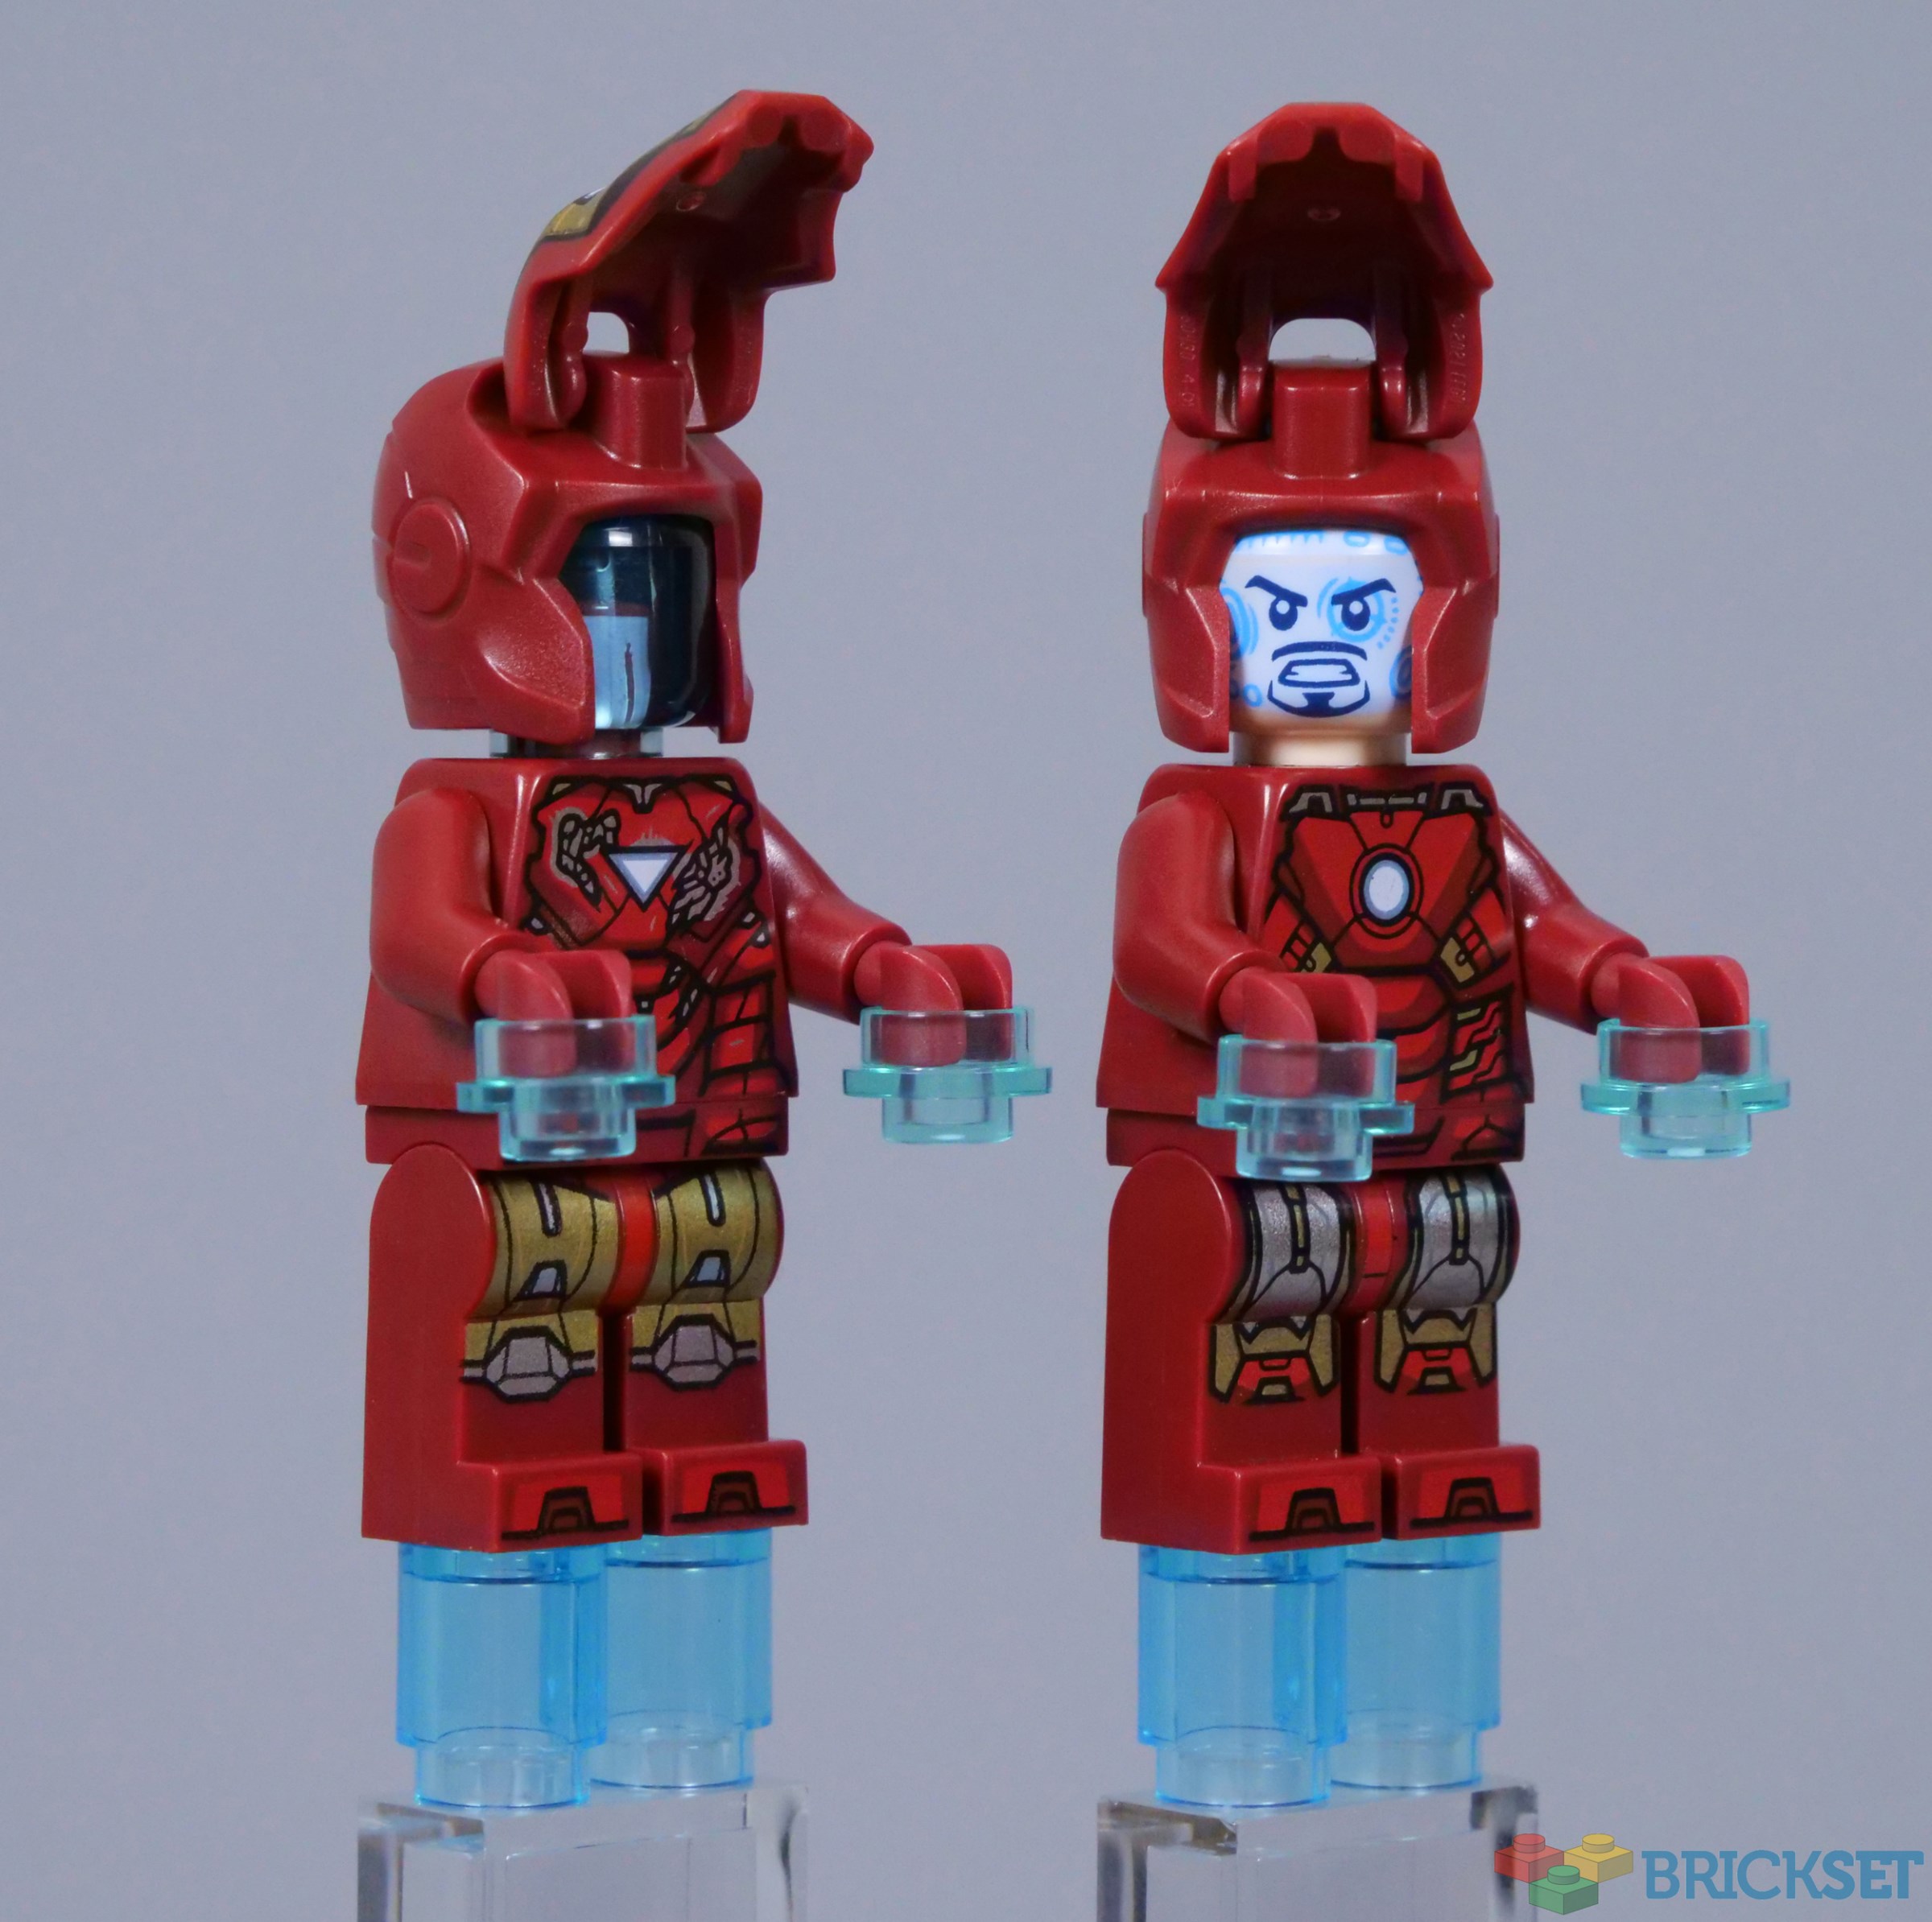 LEGO's Massive New AVENGERS Tower Set Would Impress Tony Stark - Nerdist